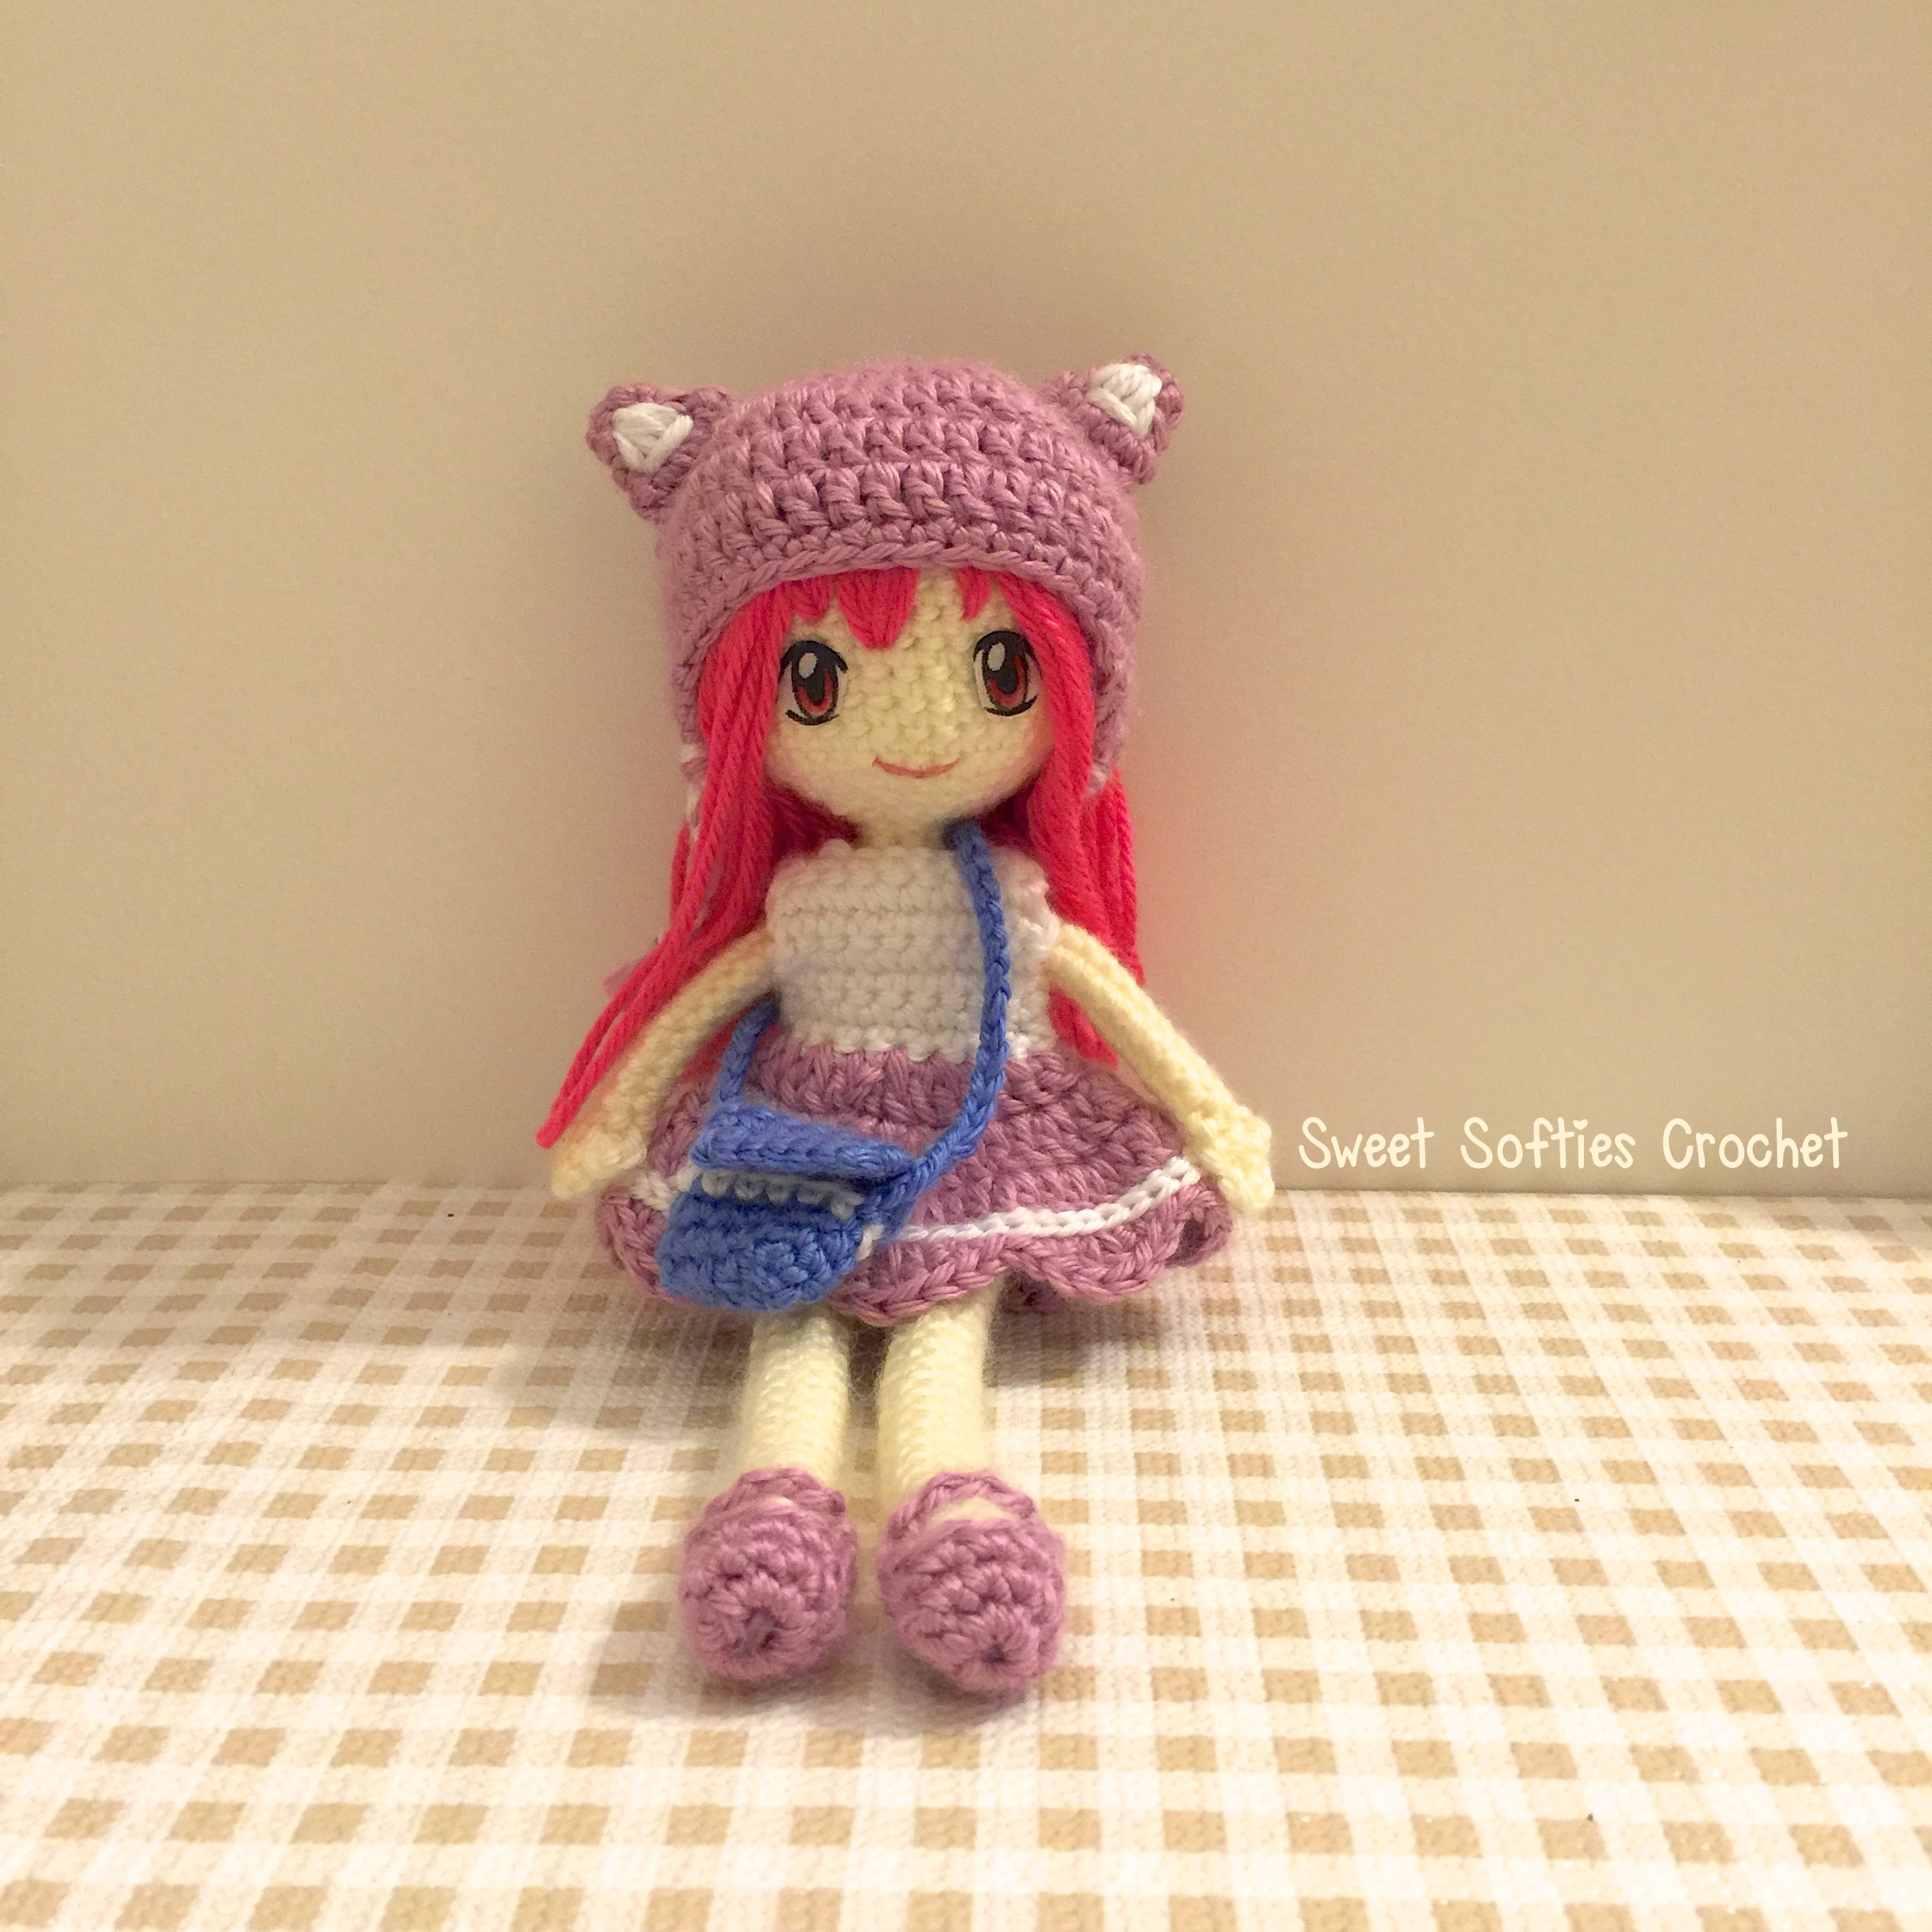 Japanese Crochet Patterns 2 Pattern Pack Japanese Anime School Girl Amigurumi Doll 9